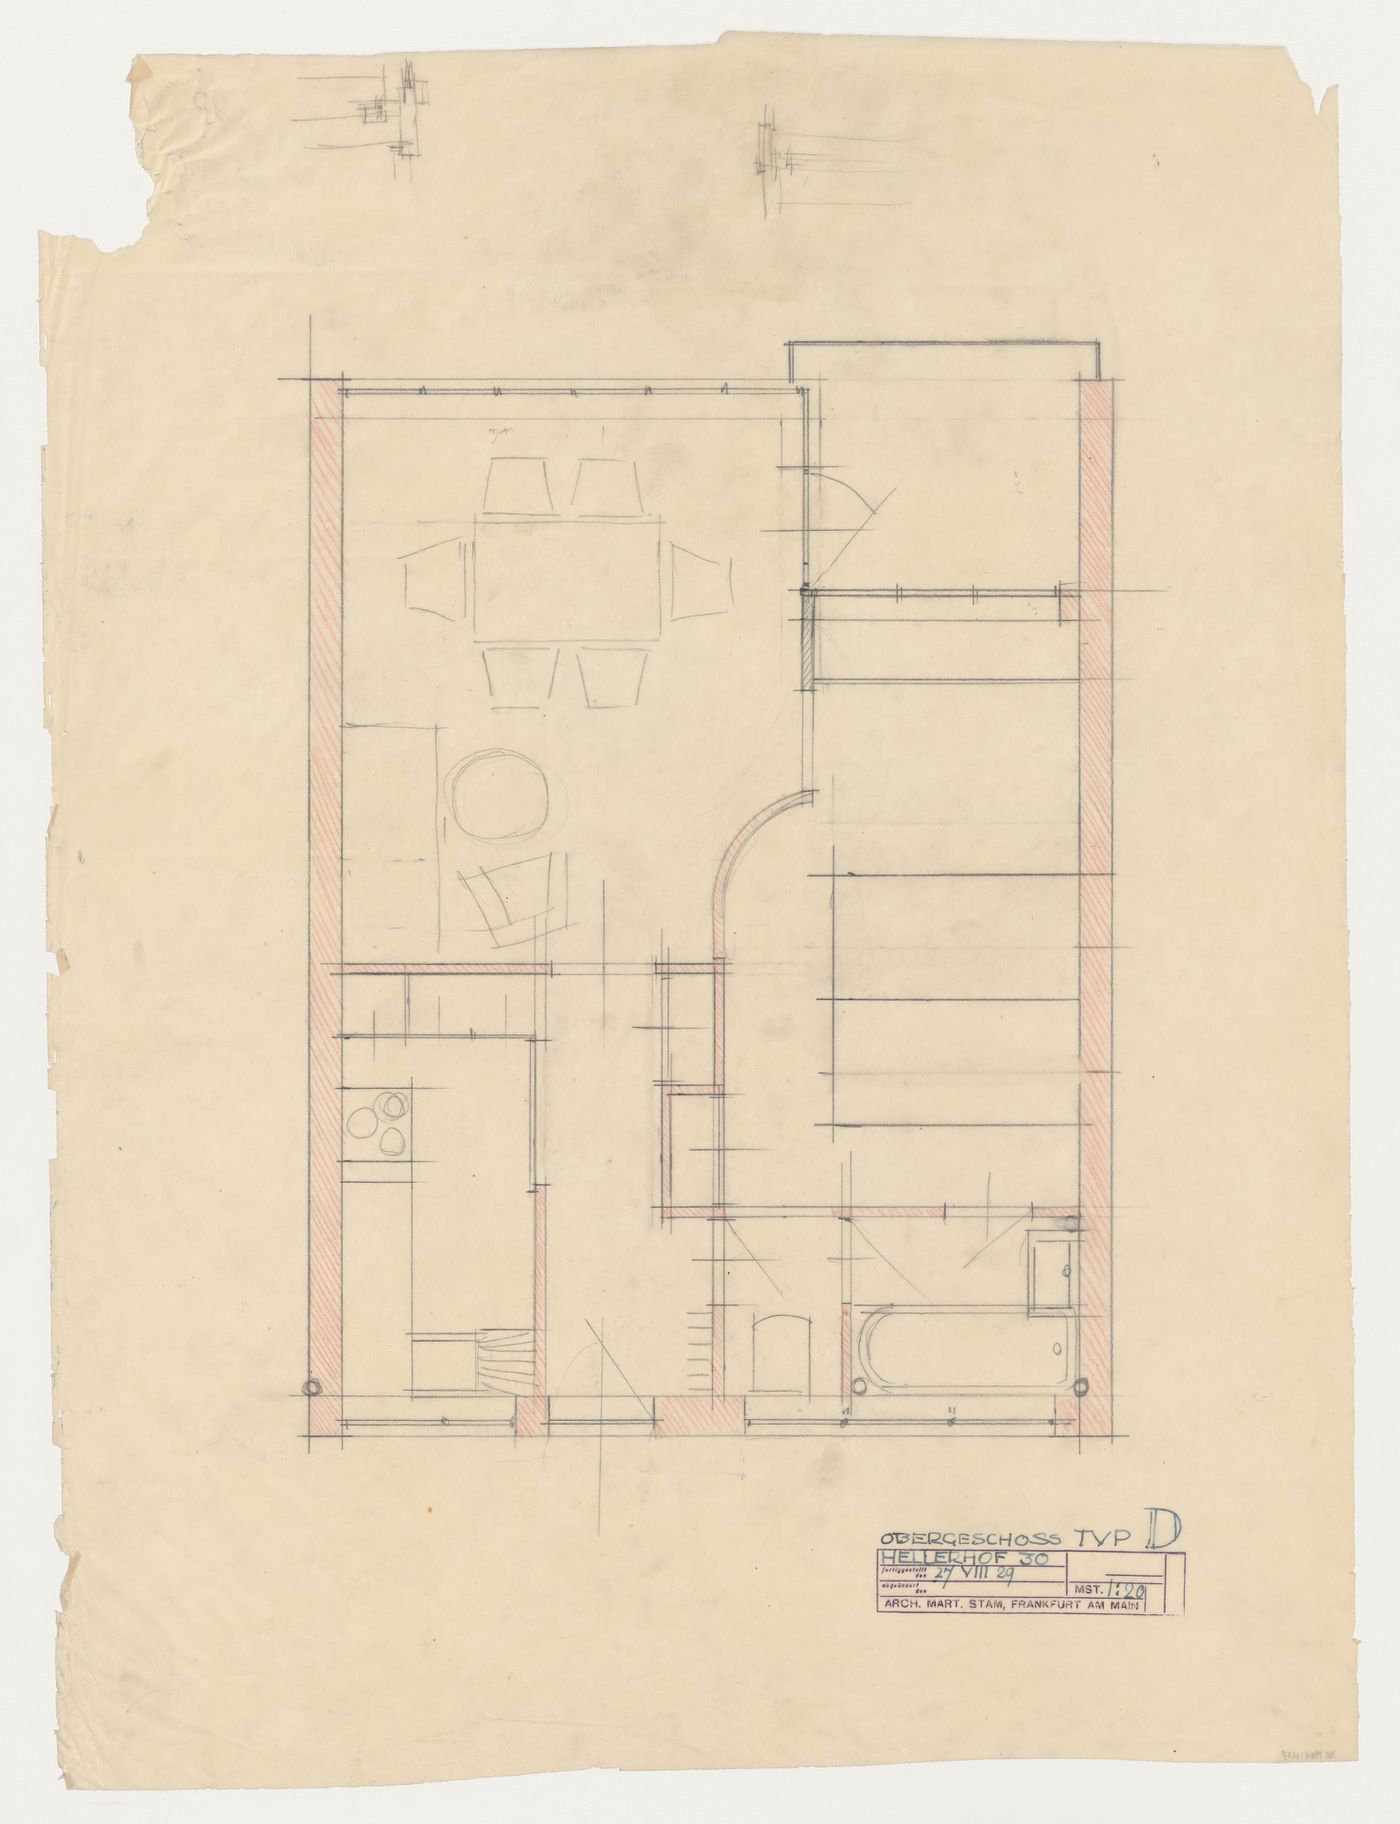 First floor plan for a type D housing unit, Hellerhof Housing Estate, Frankfurt am Main, Germany